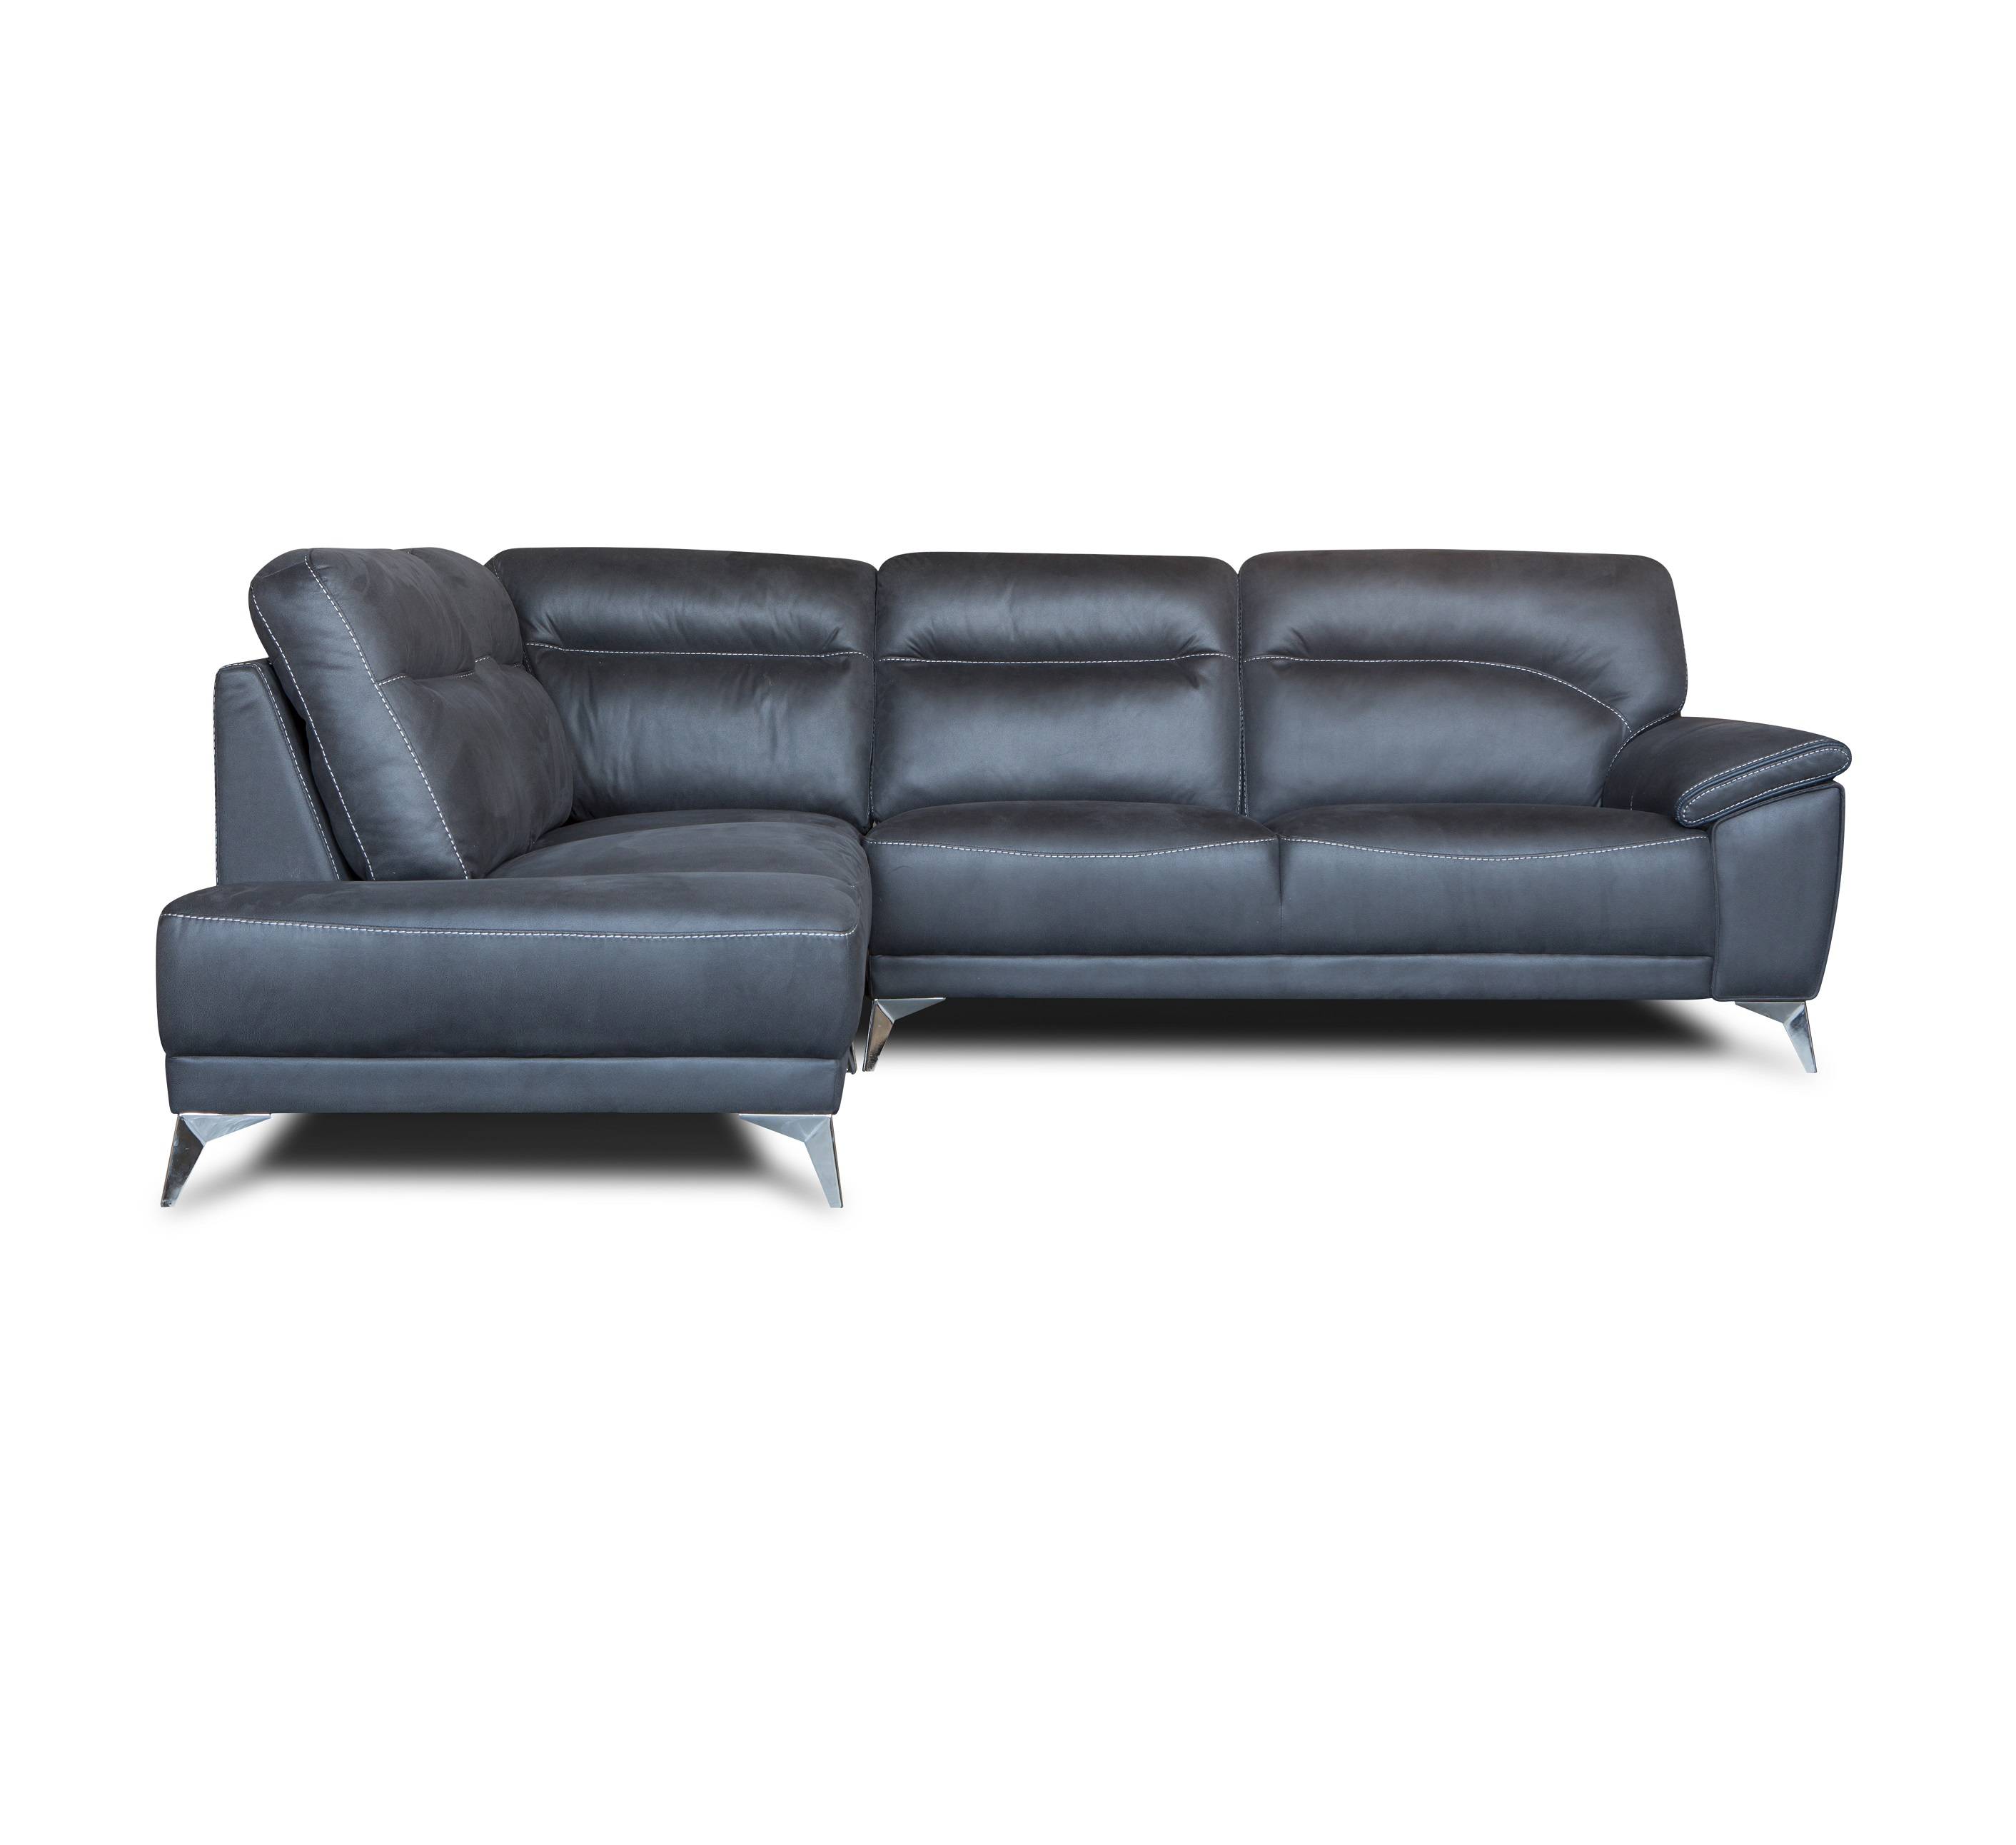 2019 latest home furniture leather l shape corner sofa